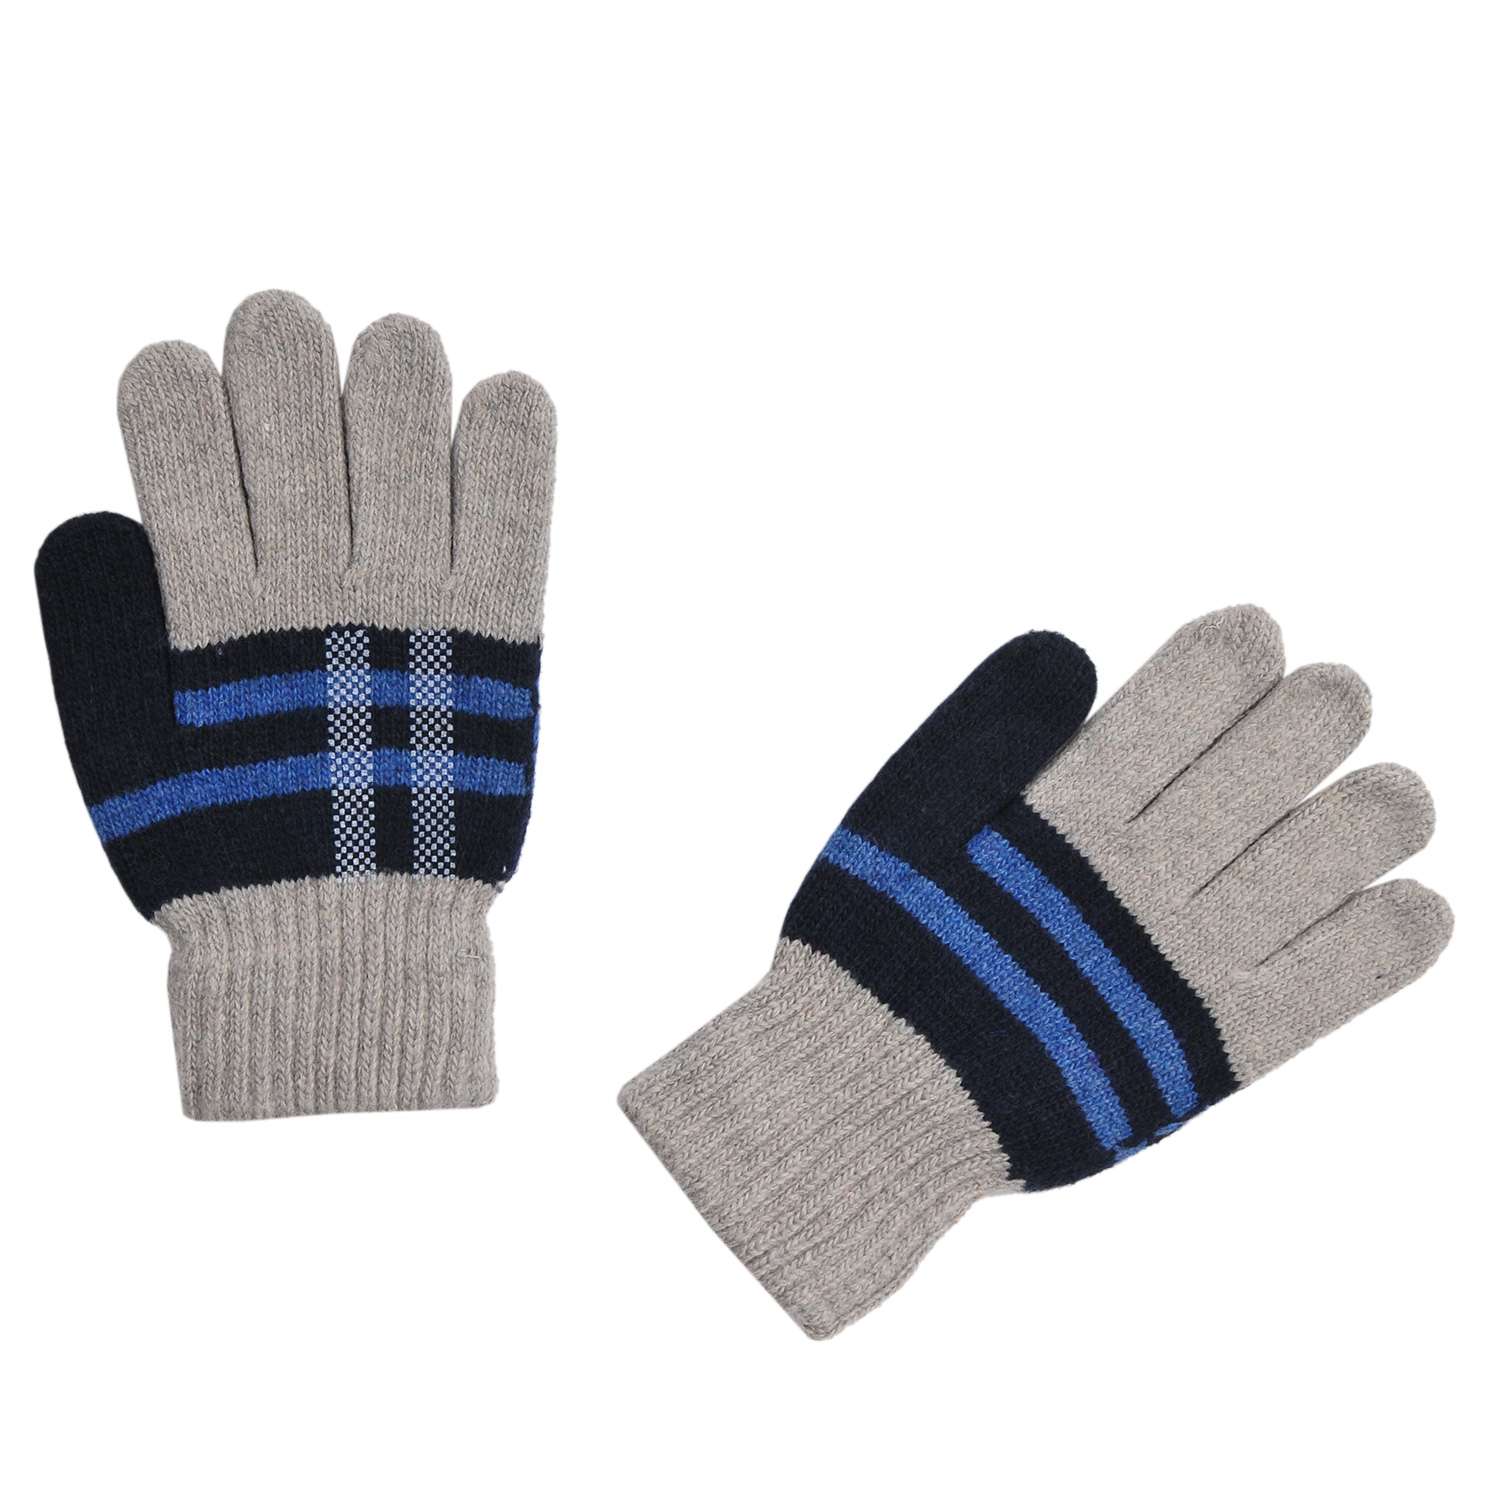 Перчатки S.gloves S 2125-L светло-серый - фото 2